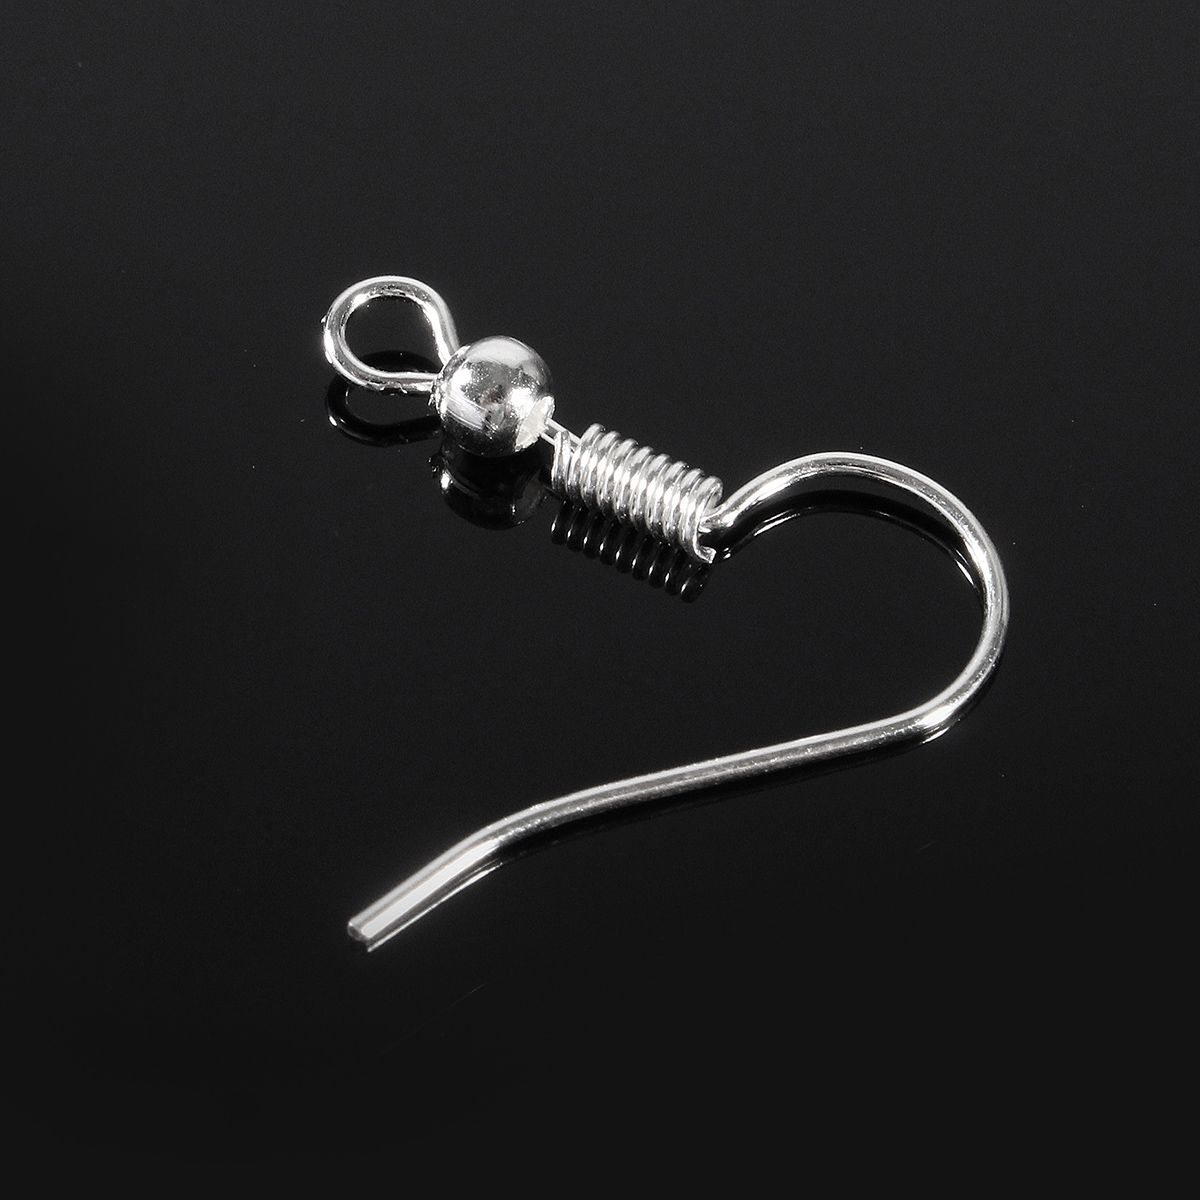 DIY-Jewellery-Making-Starter-Kits-Beads-Pliers-Chain-Tools-Set-1130244